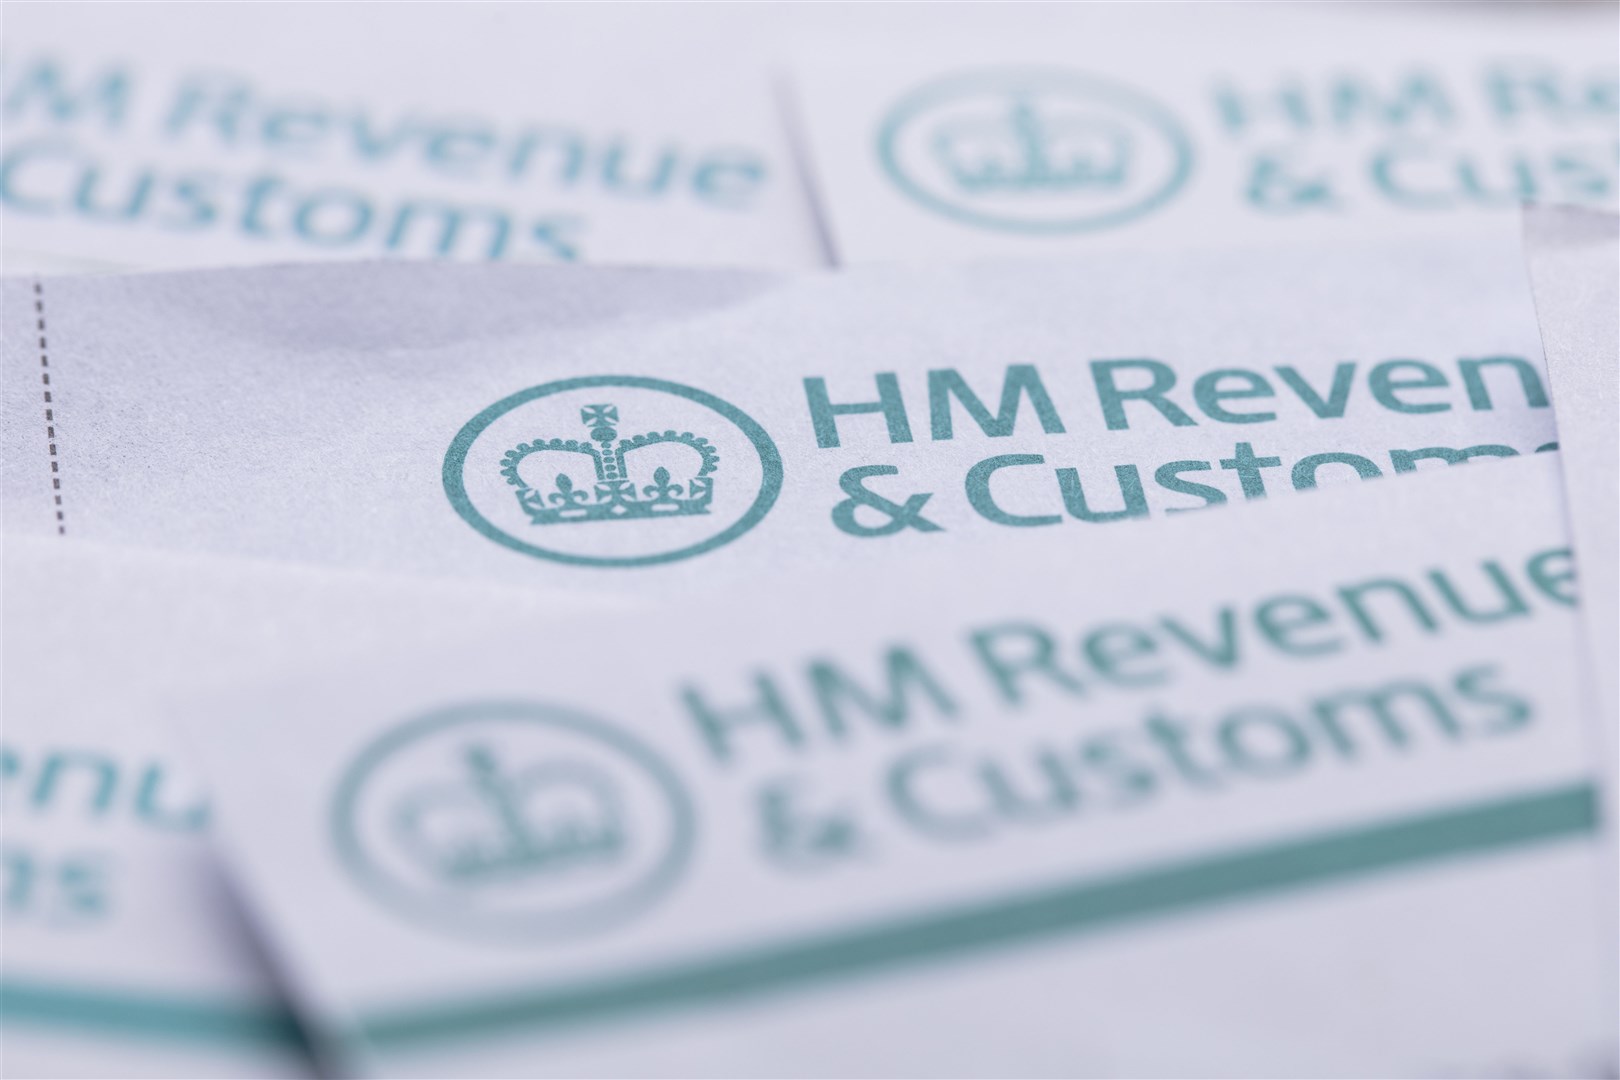 HMRC, Her Majesty's Revenue and Customs tax return paperwork.